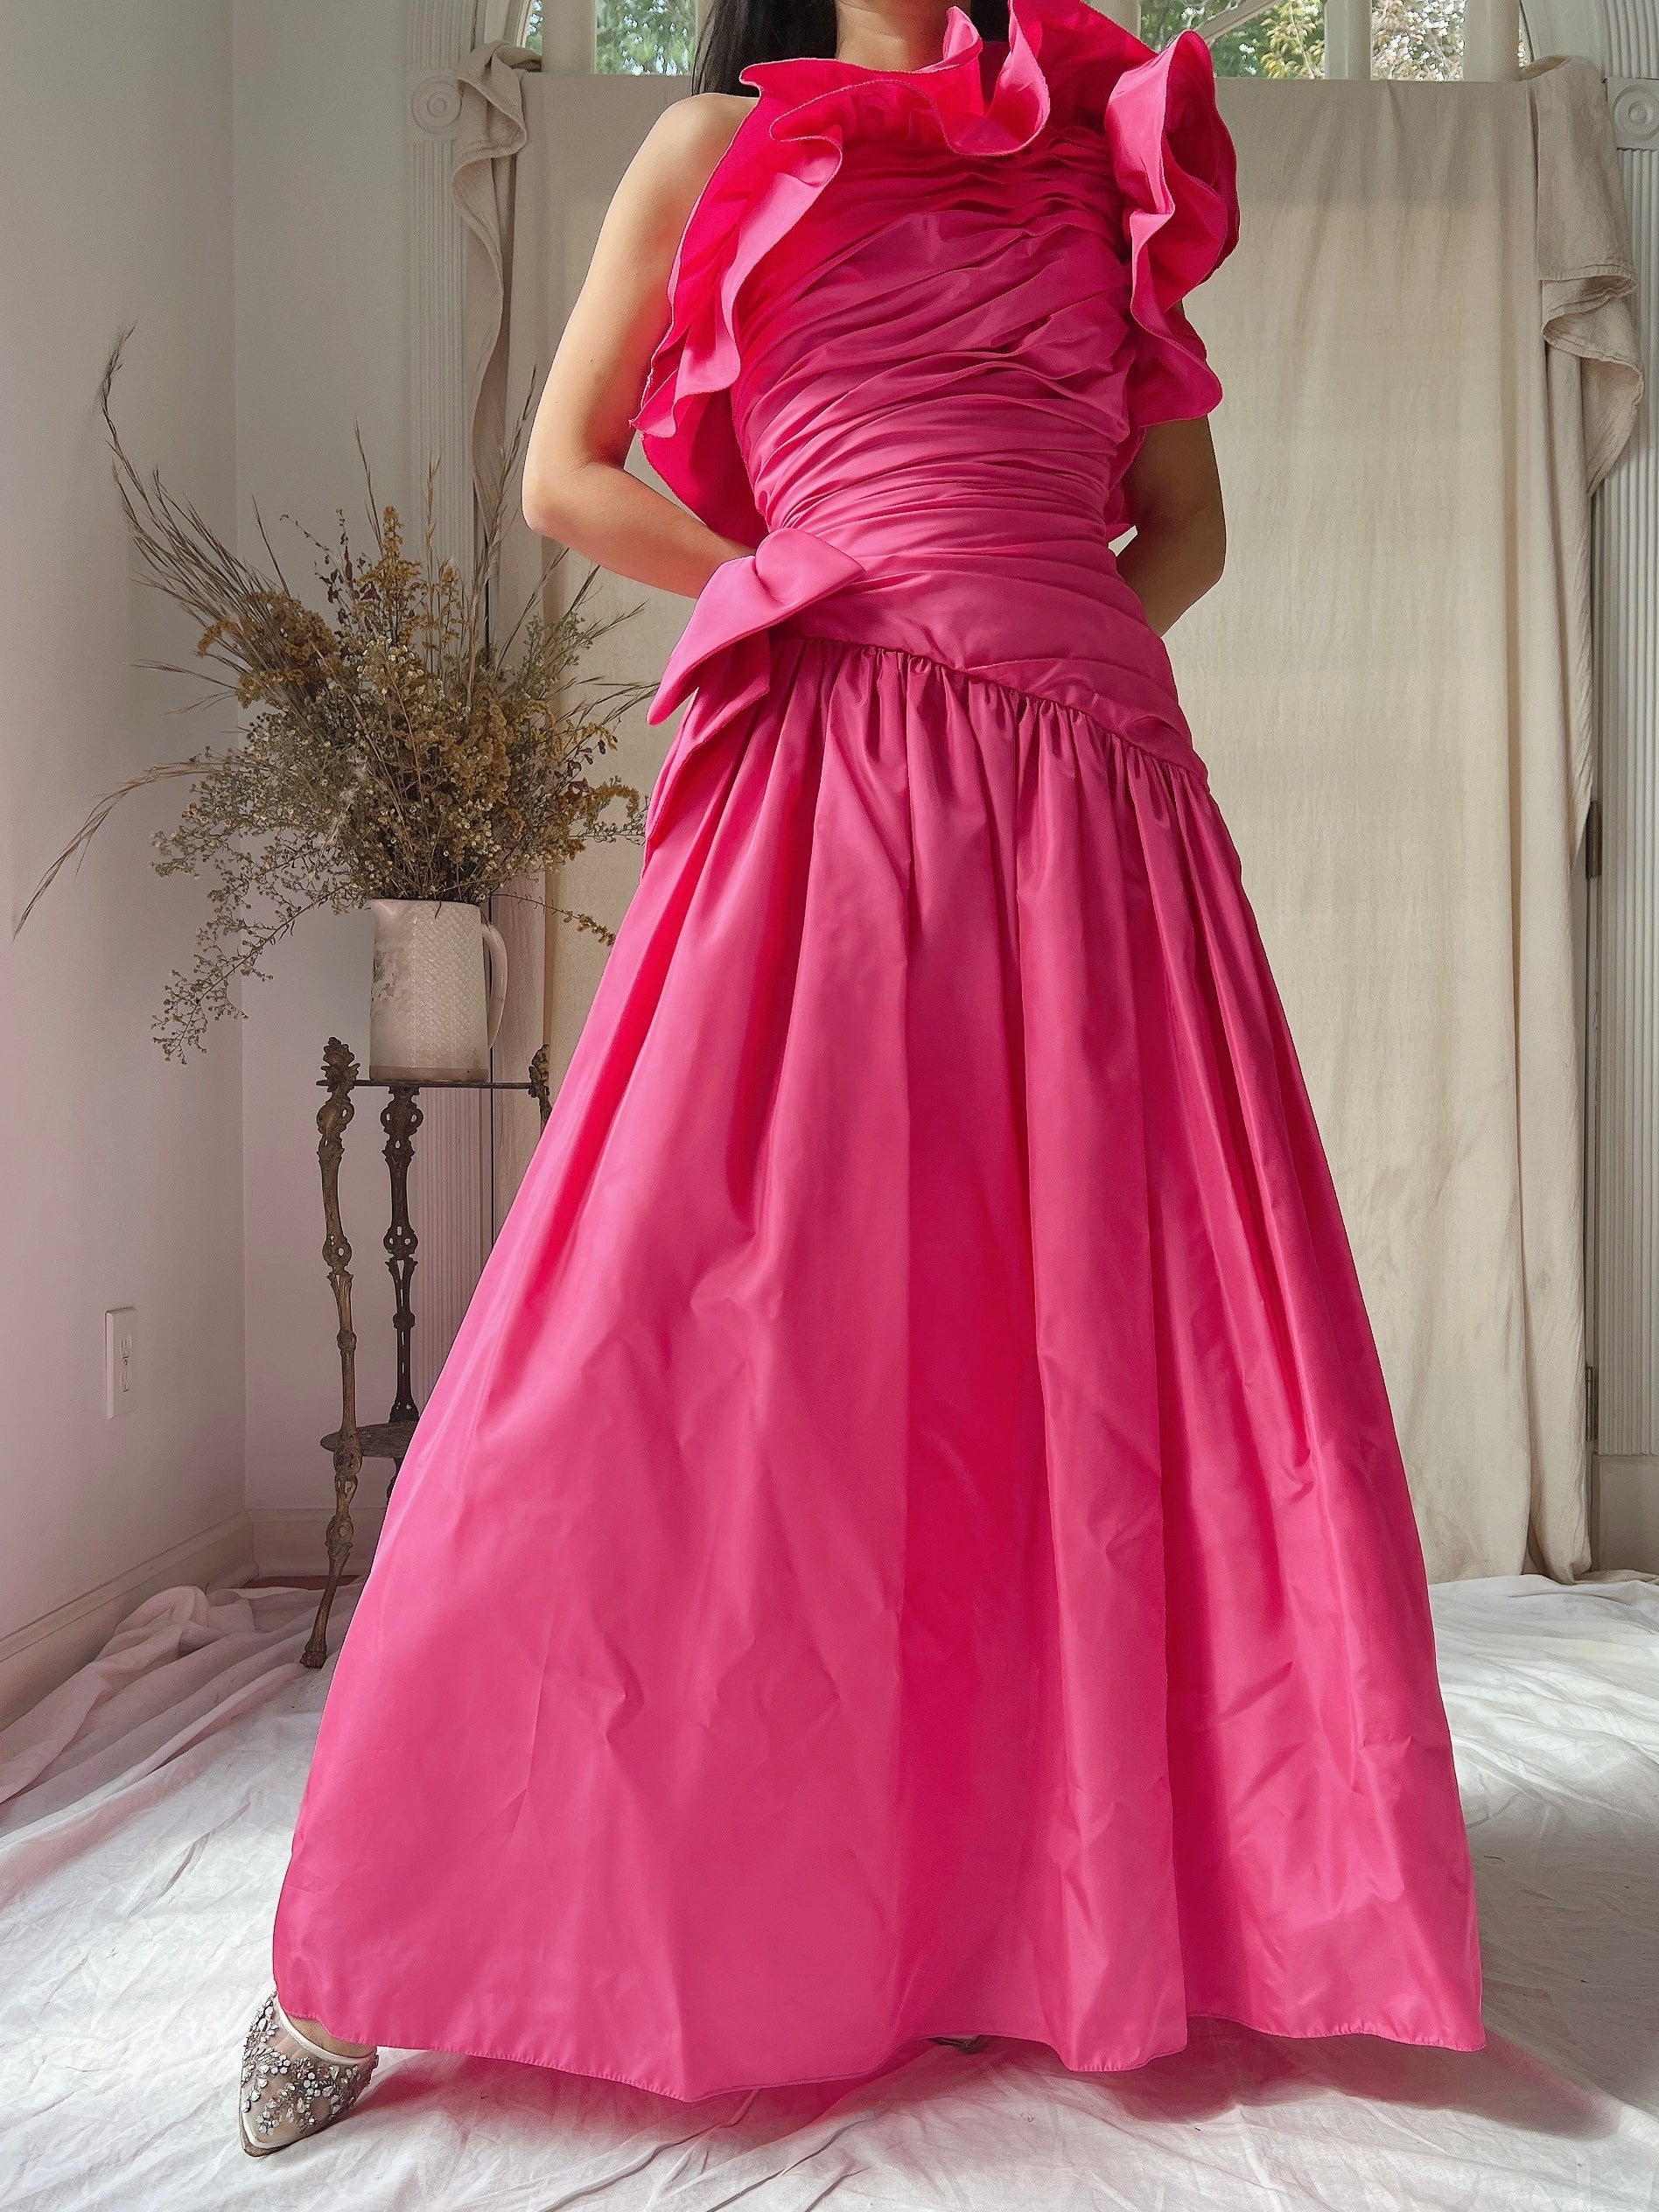 1980s Hot Pink Ruffle Pleated Full Dress - S